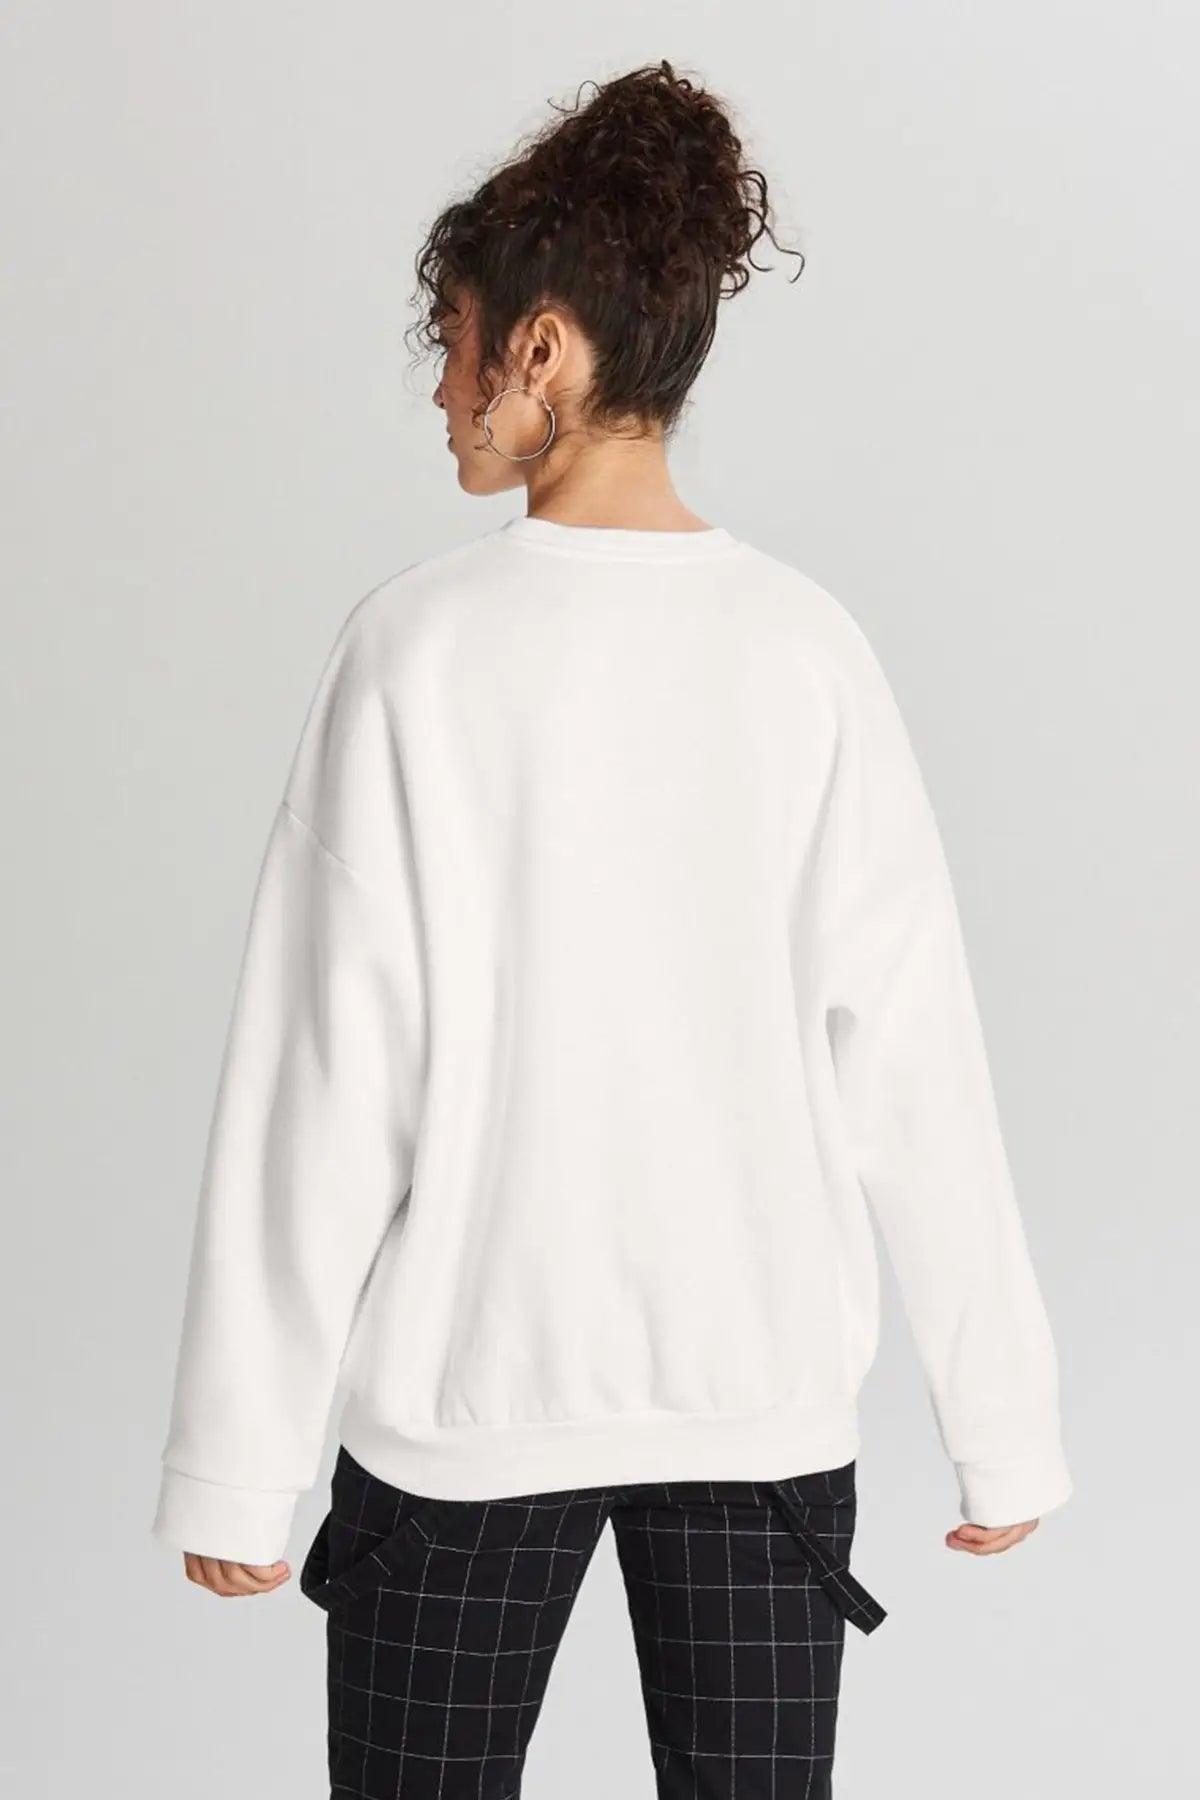 The Pasage Oversize Kadın Sweatshirt - PΛSΛGE